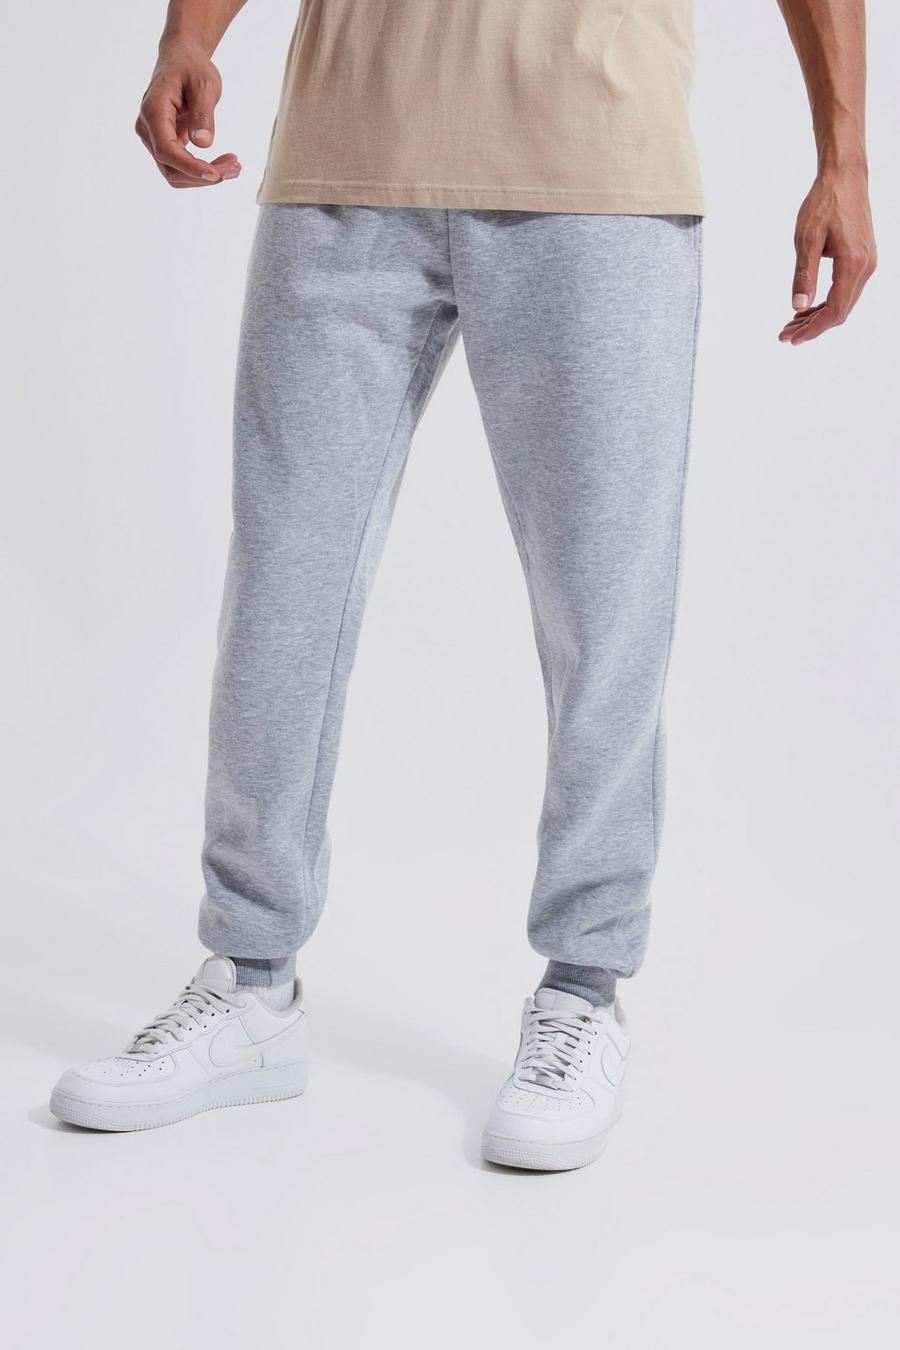 Pantaloni tuta Tall Basic Regular Fit, Grey marl grigio